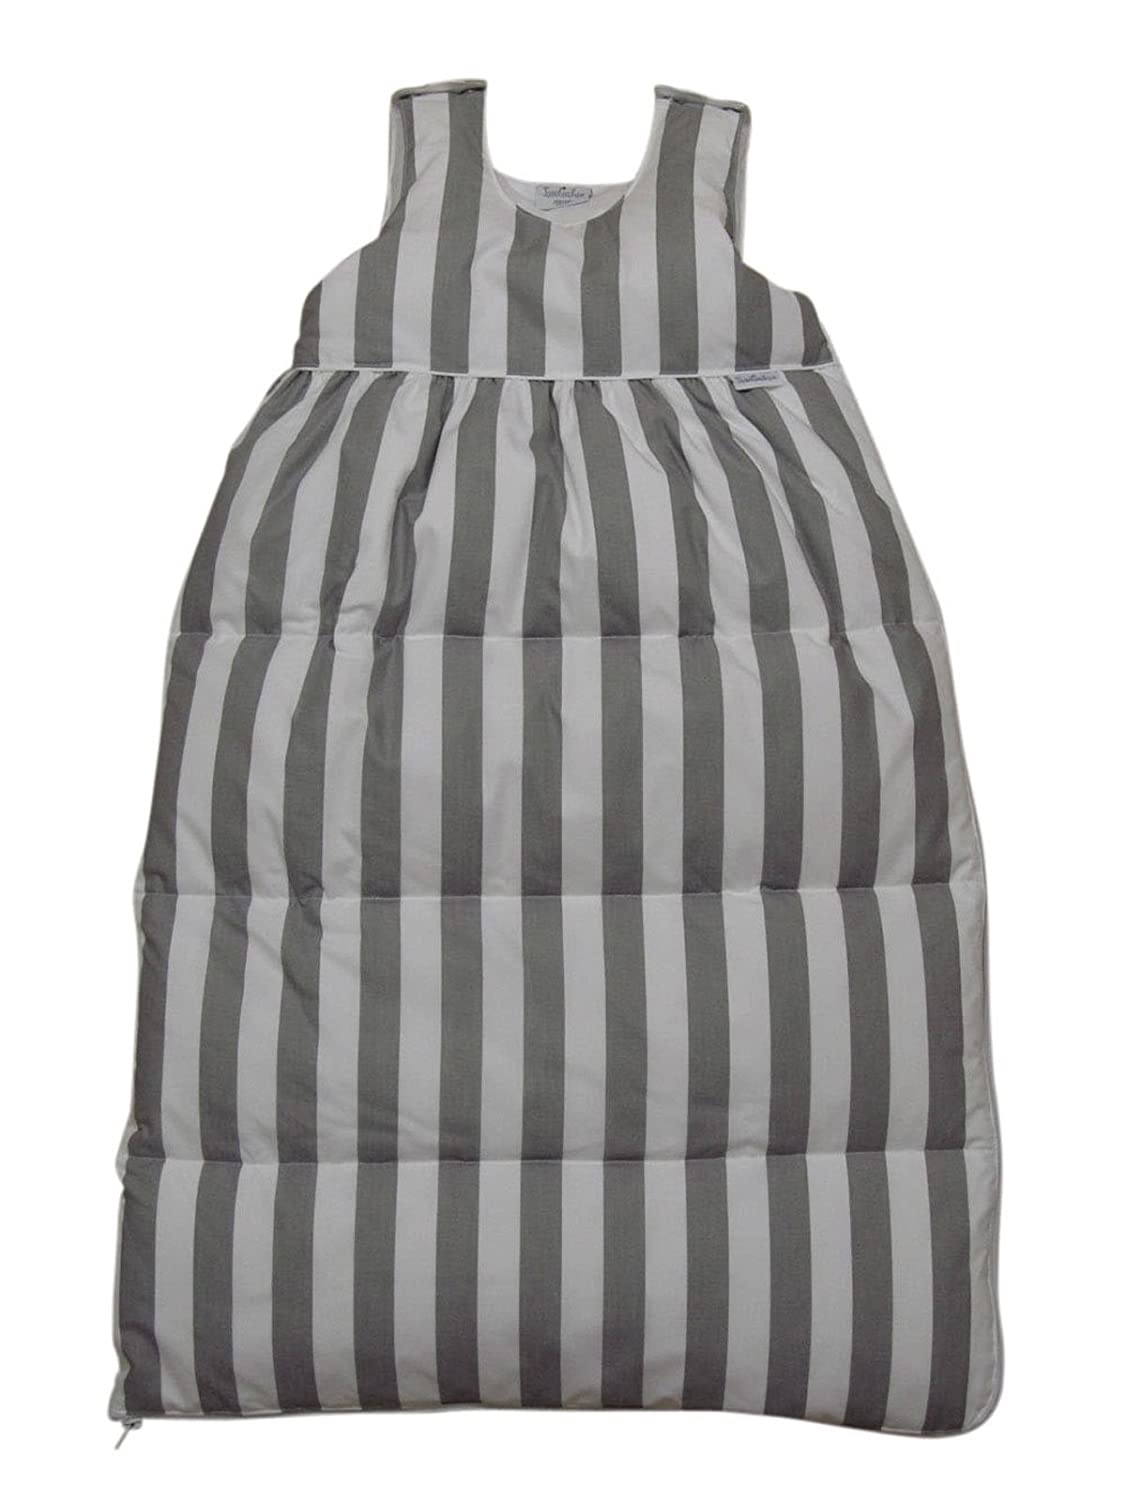 Tavolinchen 40/105-206-110 Down Sleeping Bag 110 cm Wide White/Grey Stripes